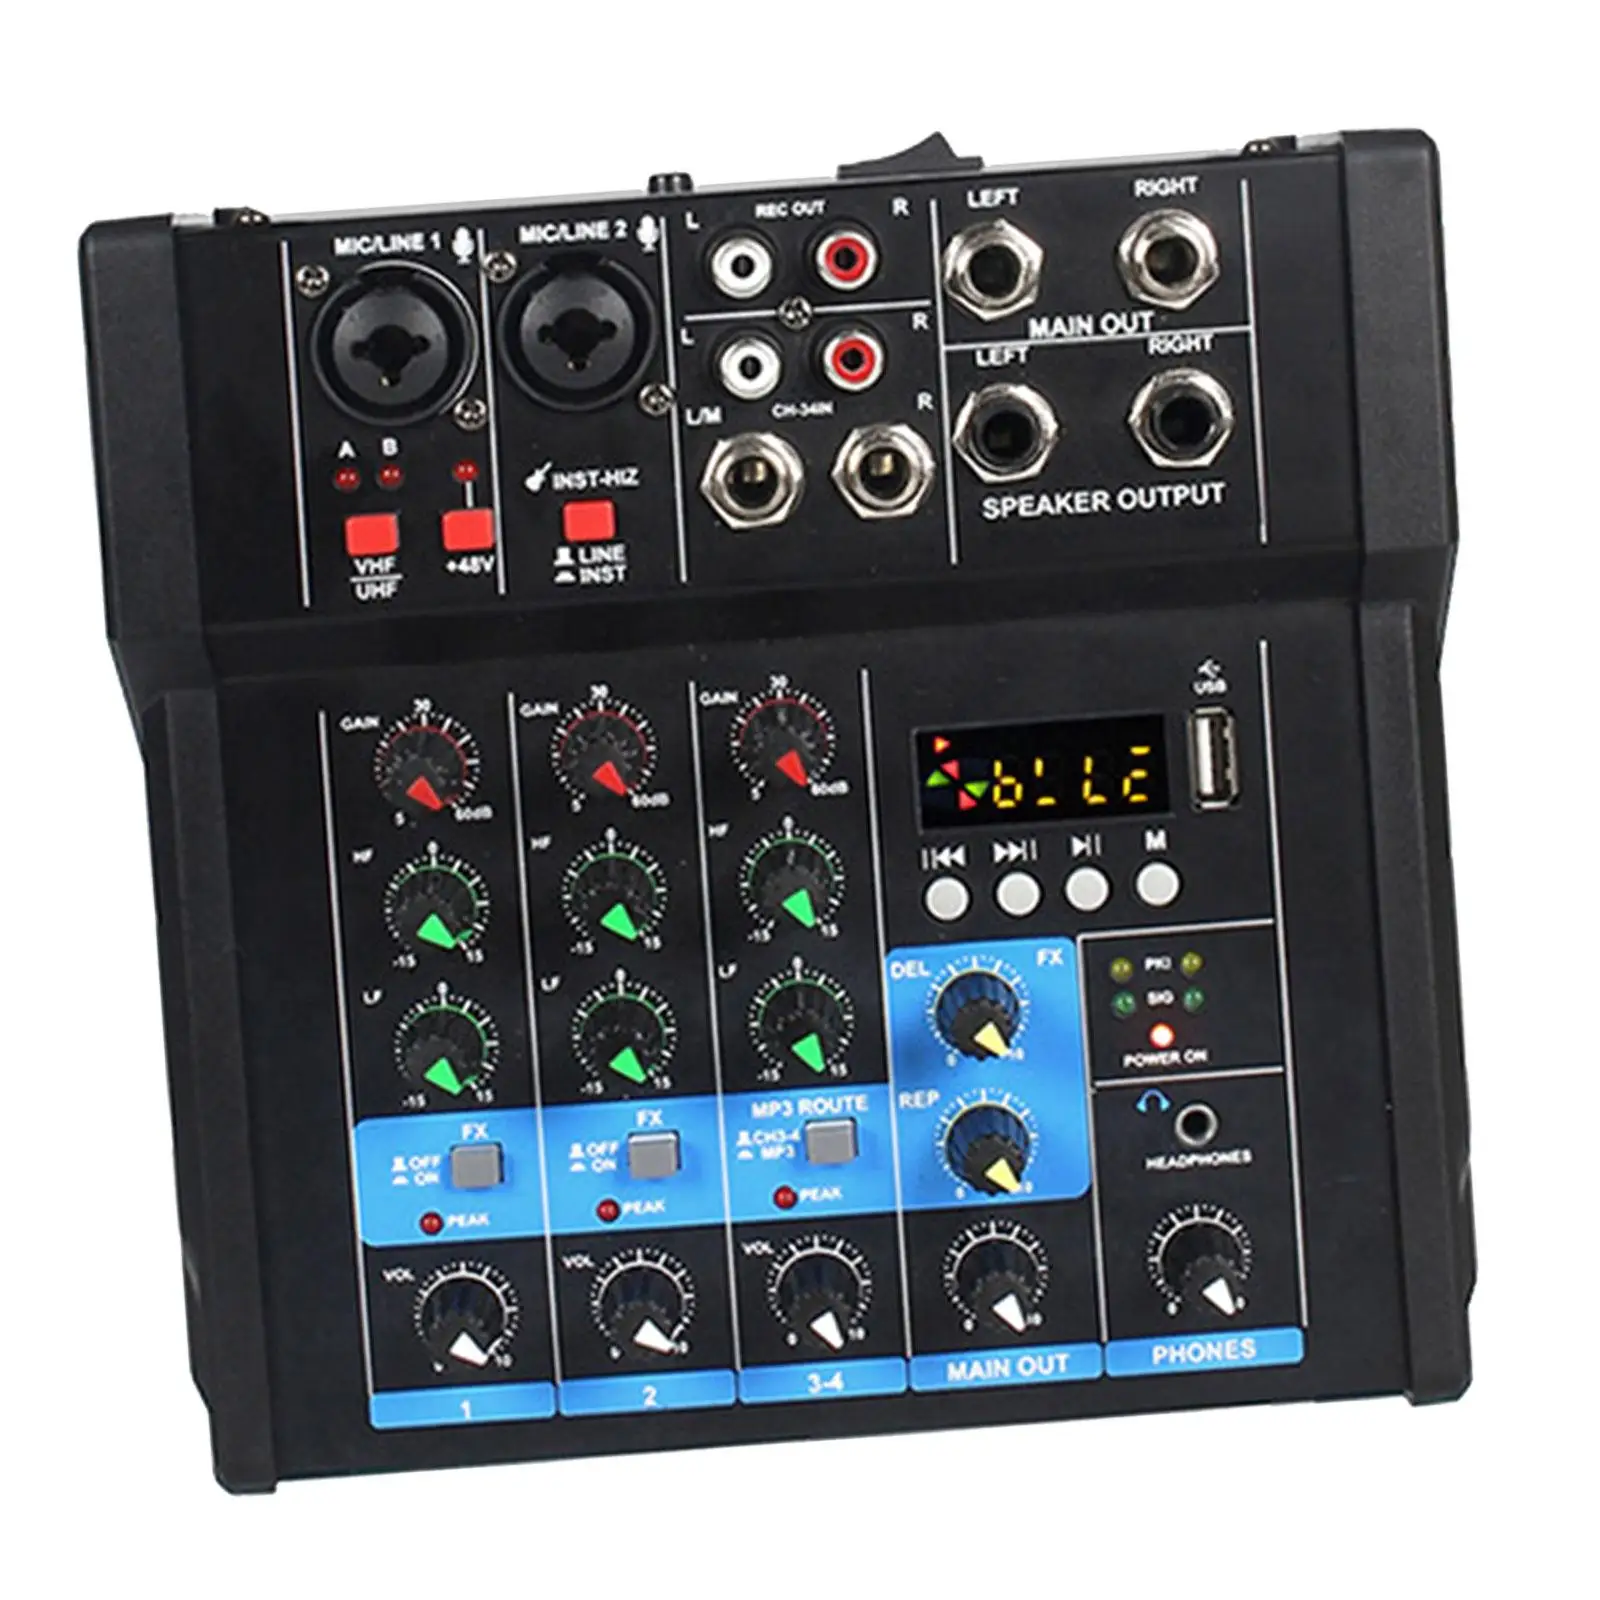 Audio Mixer Amplifier Professional 48V Phantom Power Portable Sound Mixing Console for DJ Mixing Home Karaoke Studio Recording